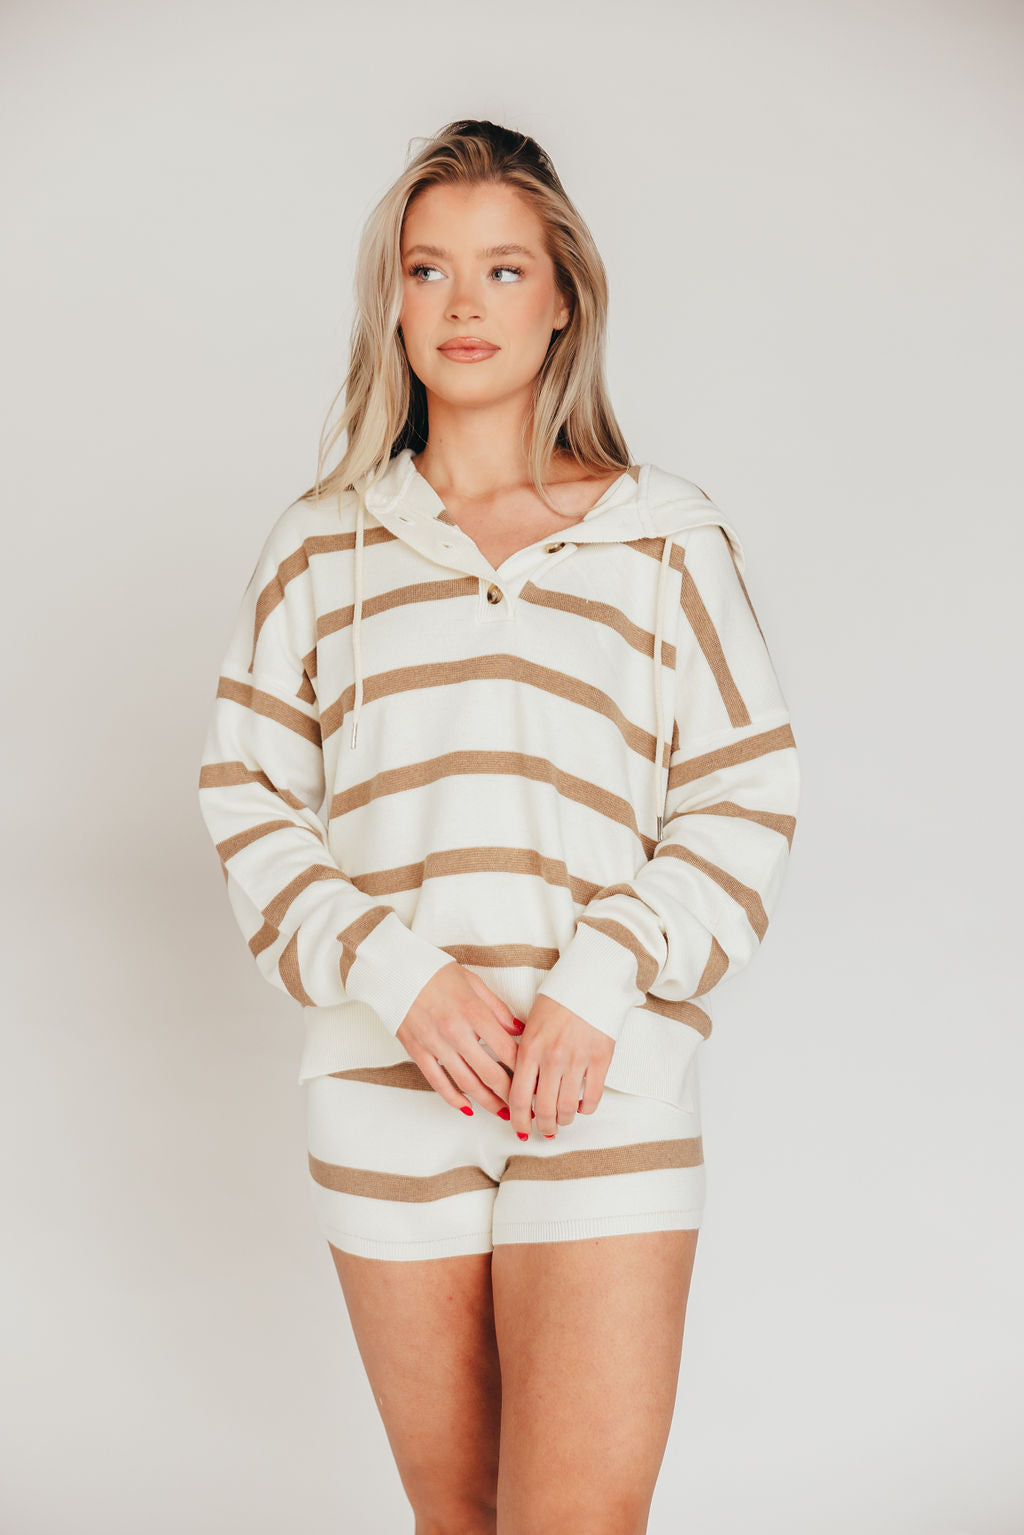 Brighton Shorts in White and Wheat Stripe